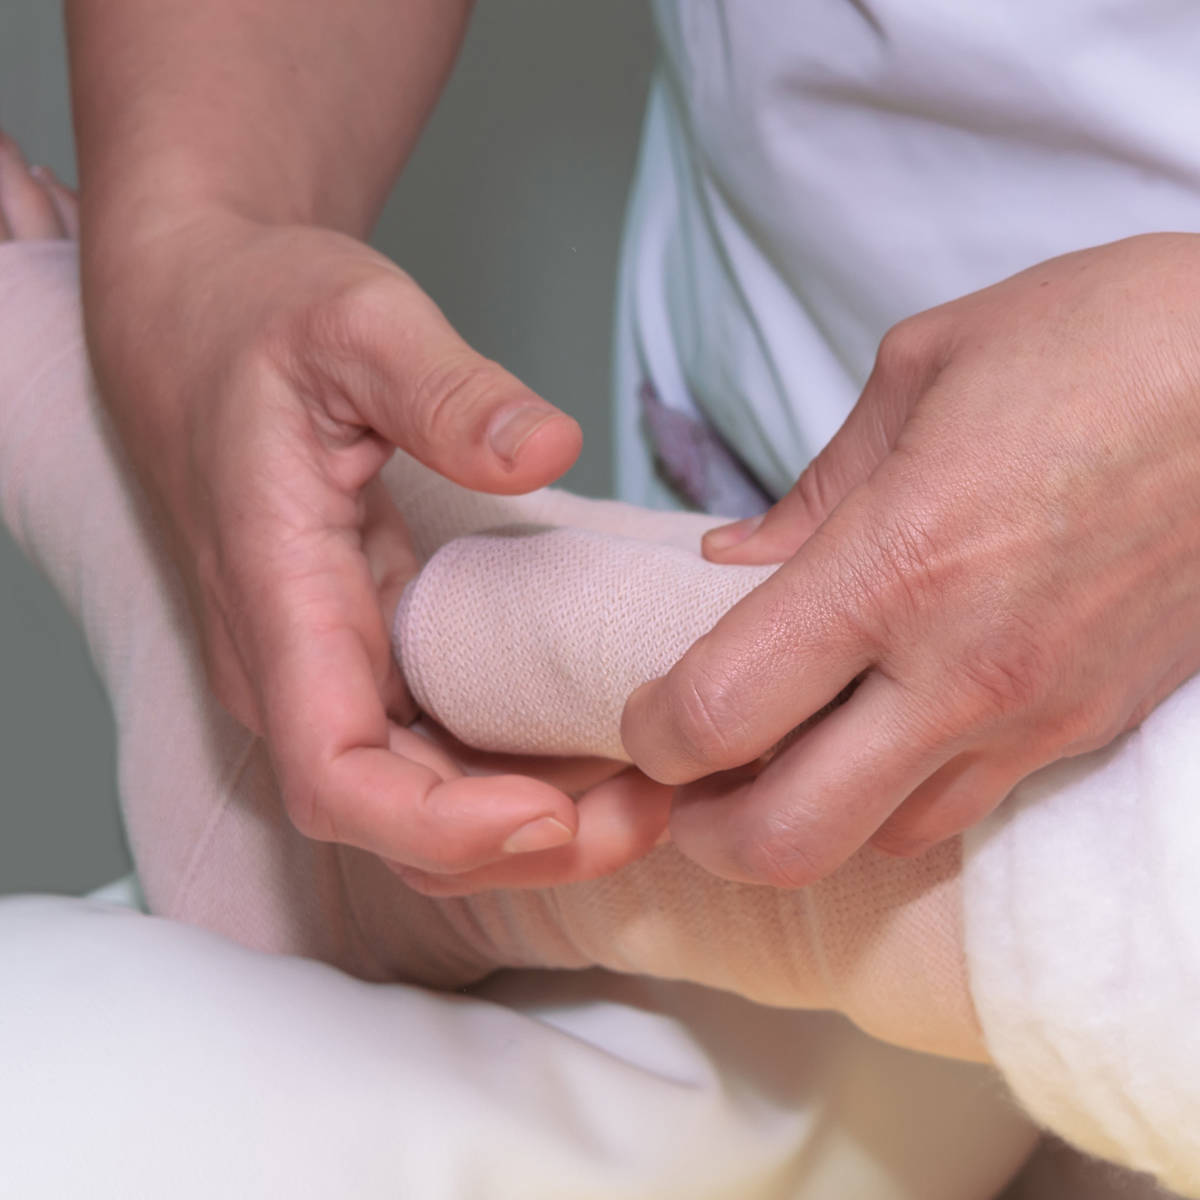 Hands putting compression bandage on ankle